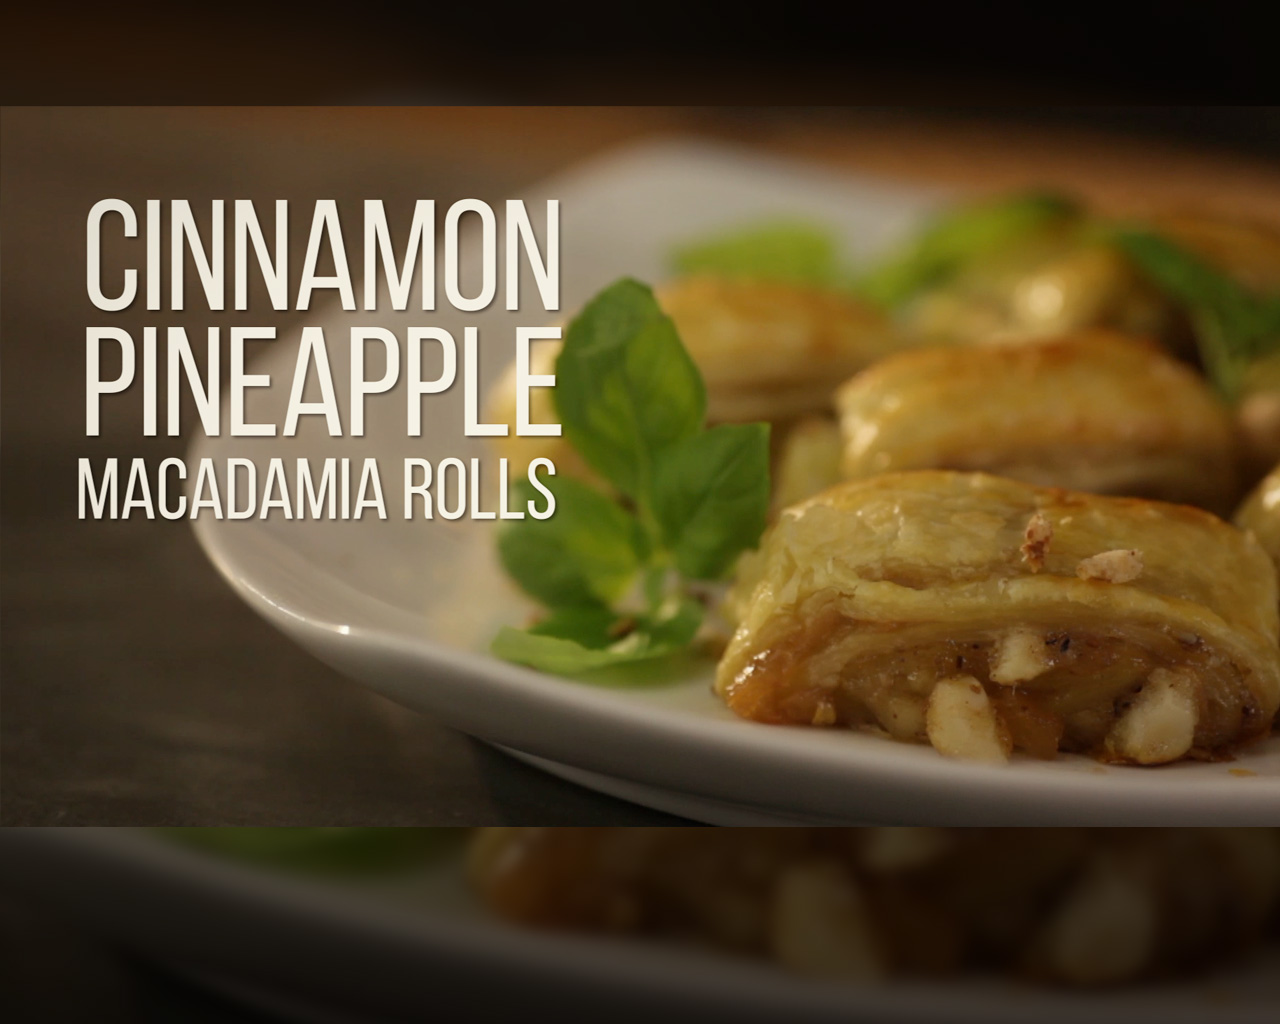 Cinnamon Pineapple Macadamia Rolls